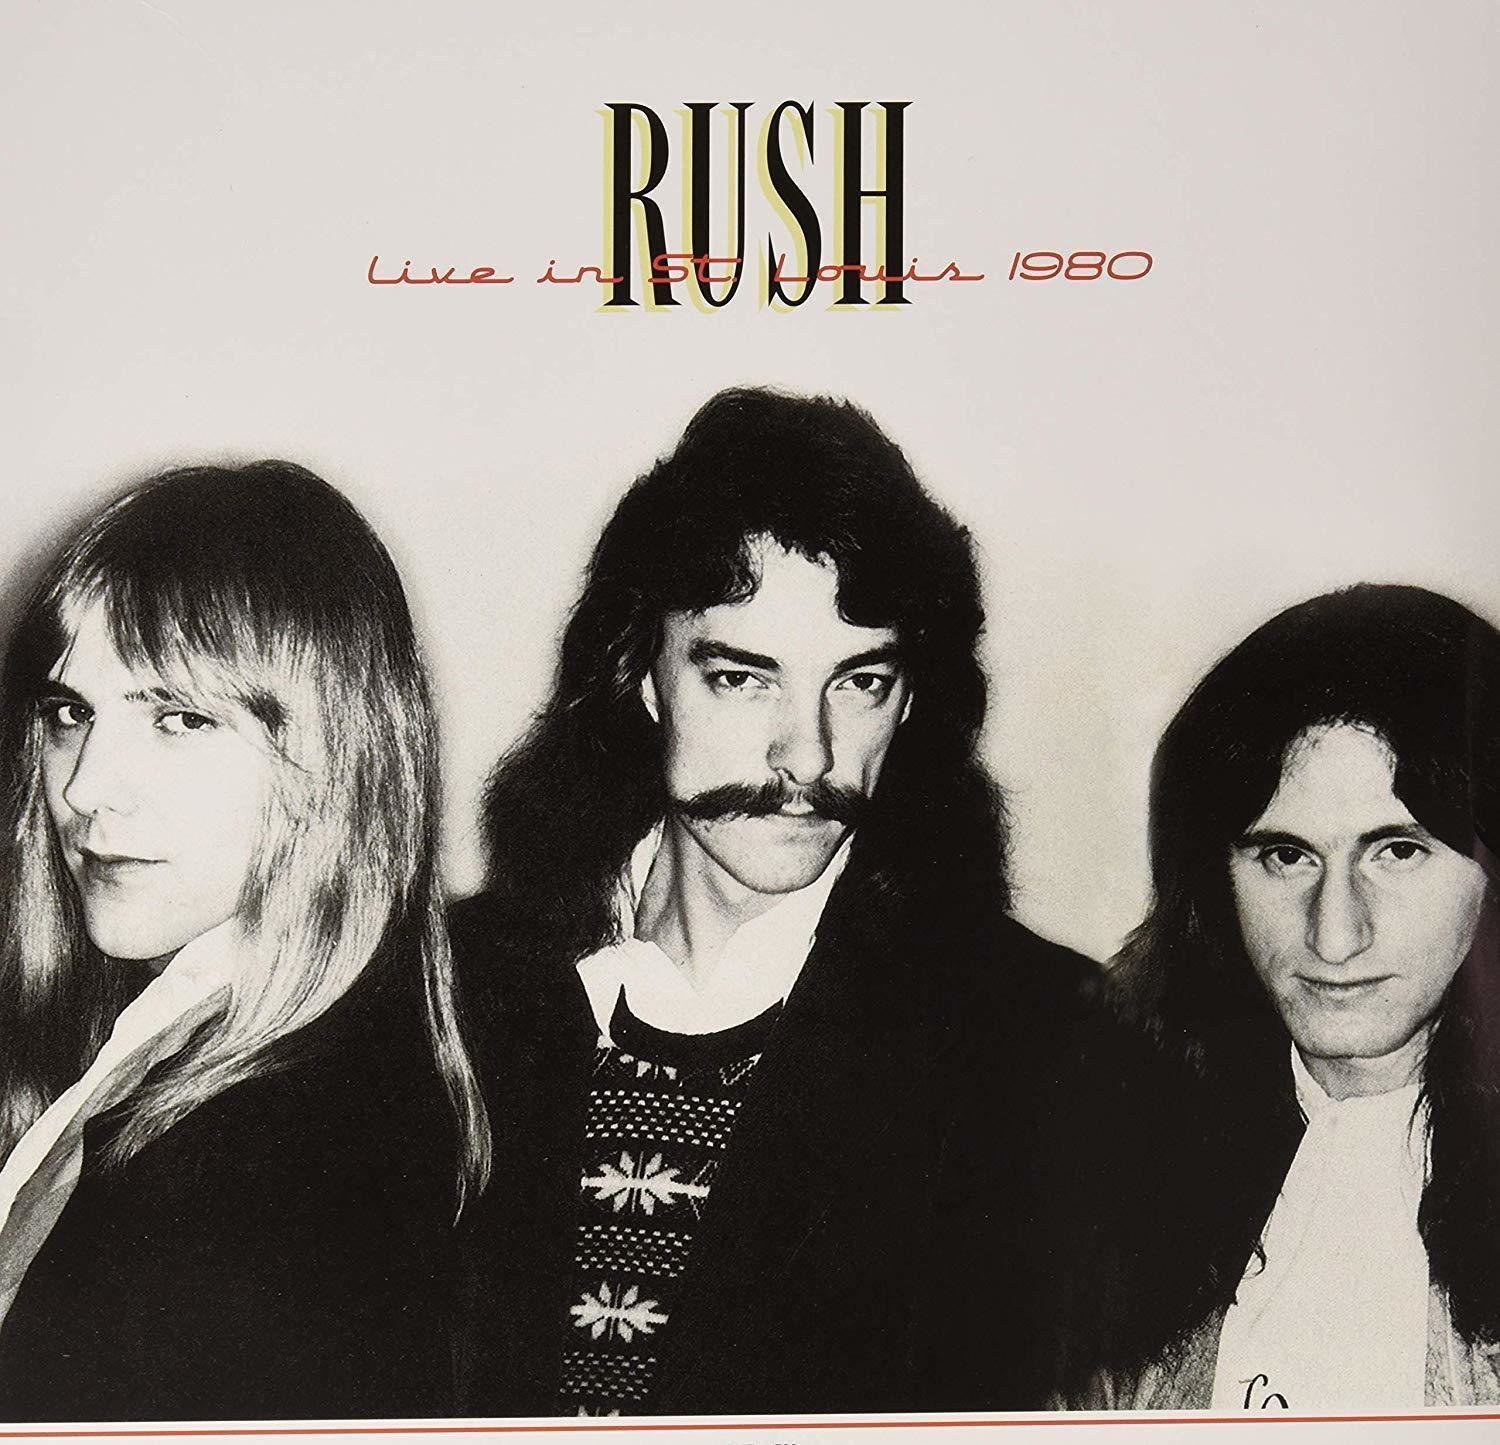 Vinyl Record Rush - Live In St. Louis 1980 (2 LP)